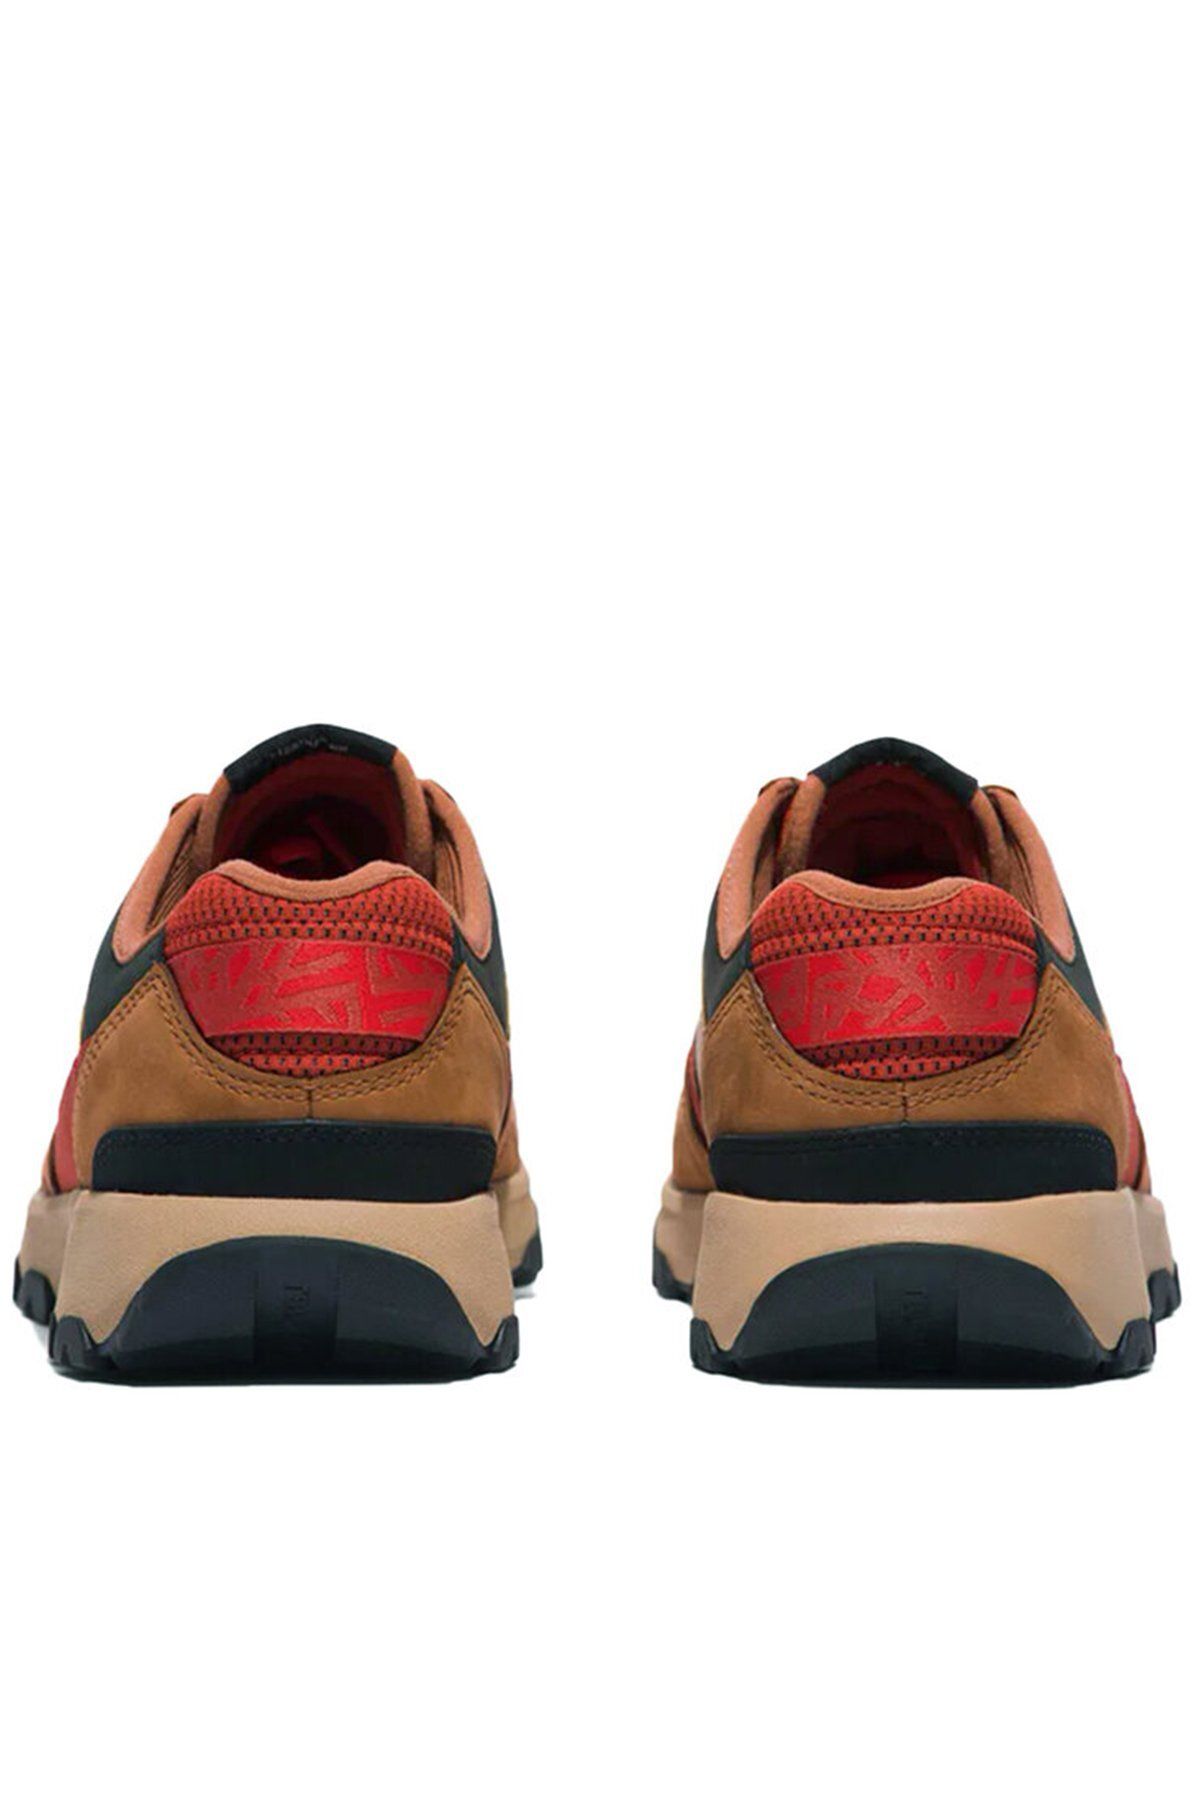 Timberland Erkek Kahverengi Ayakkabı ( Model Kodu : TB0A611MF131 )